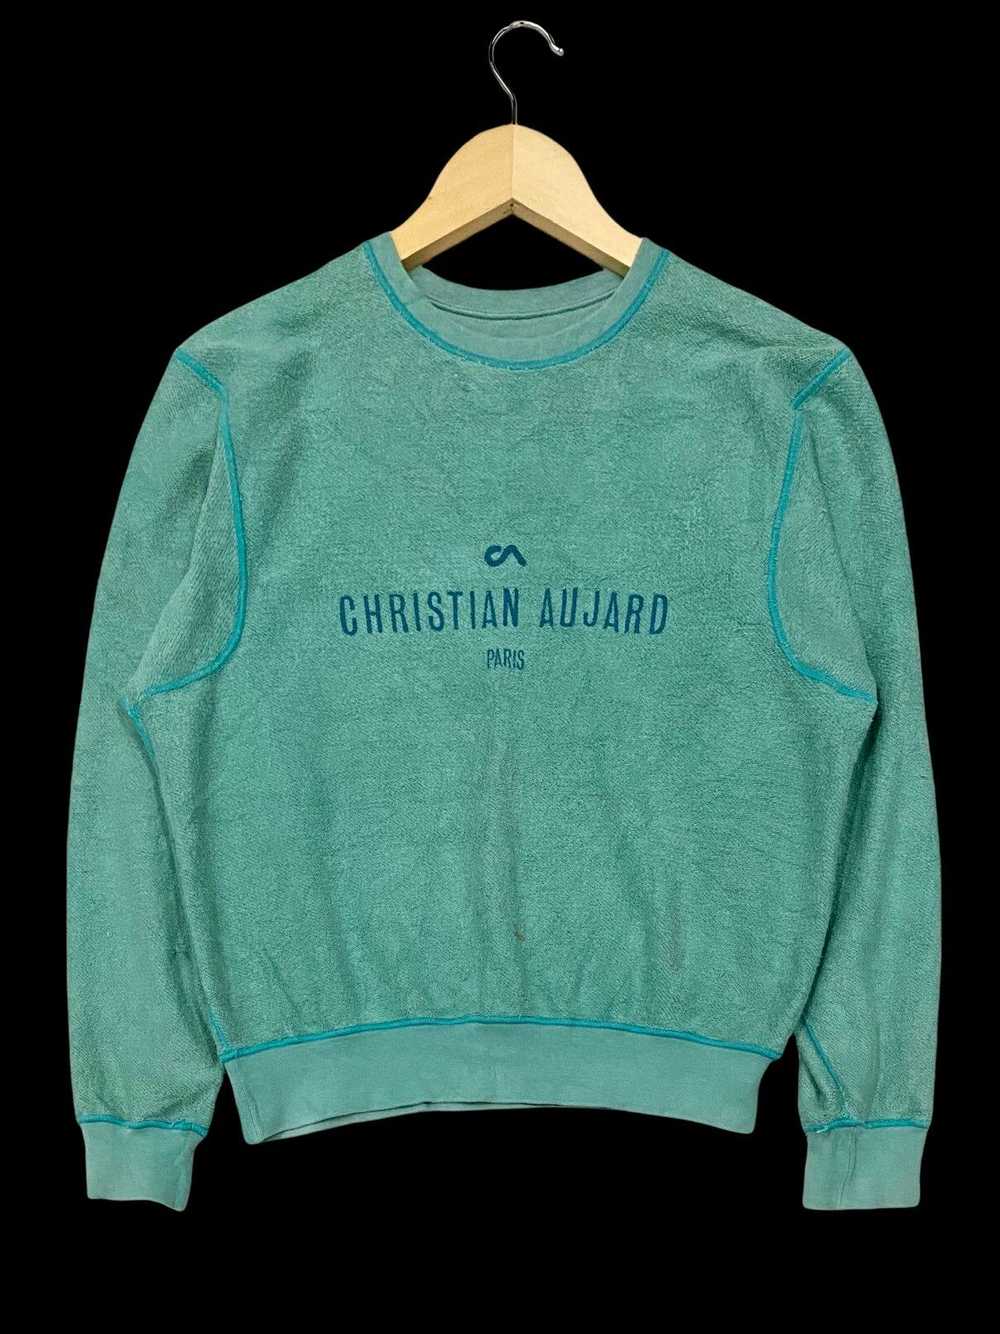 Brand × Other × Vintage VTG CHRISTIAN AUJARD PARI… - image 2